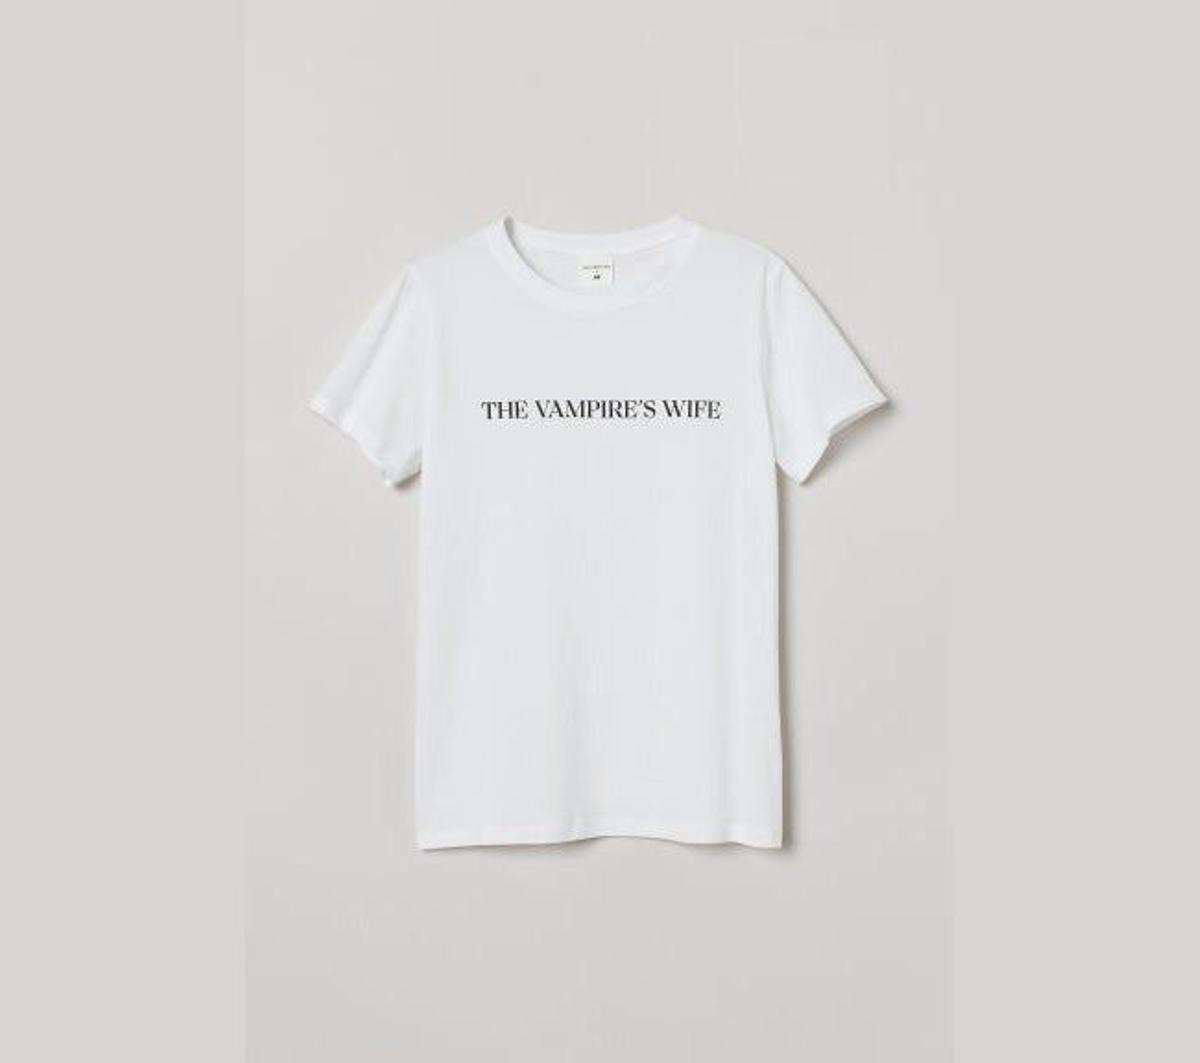 Camiseta blanca básica de The Vampire's Wife x H&amp;M. (Precio: 14,99 euros)